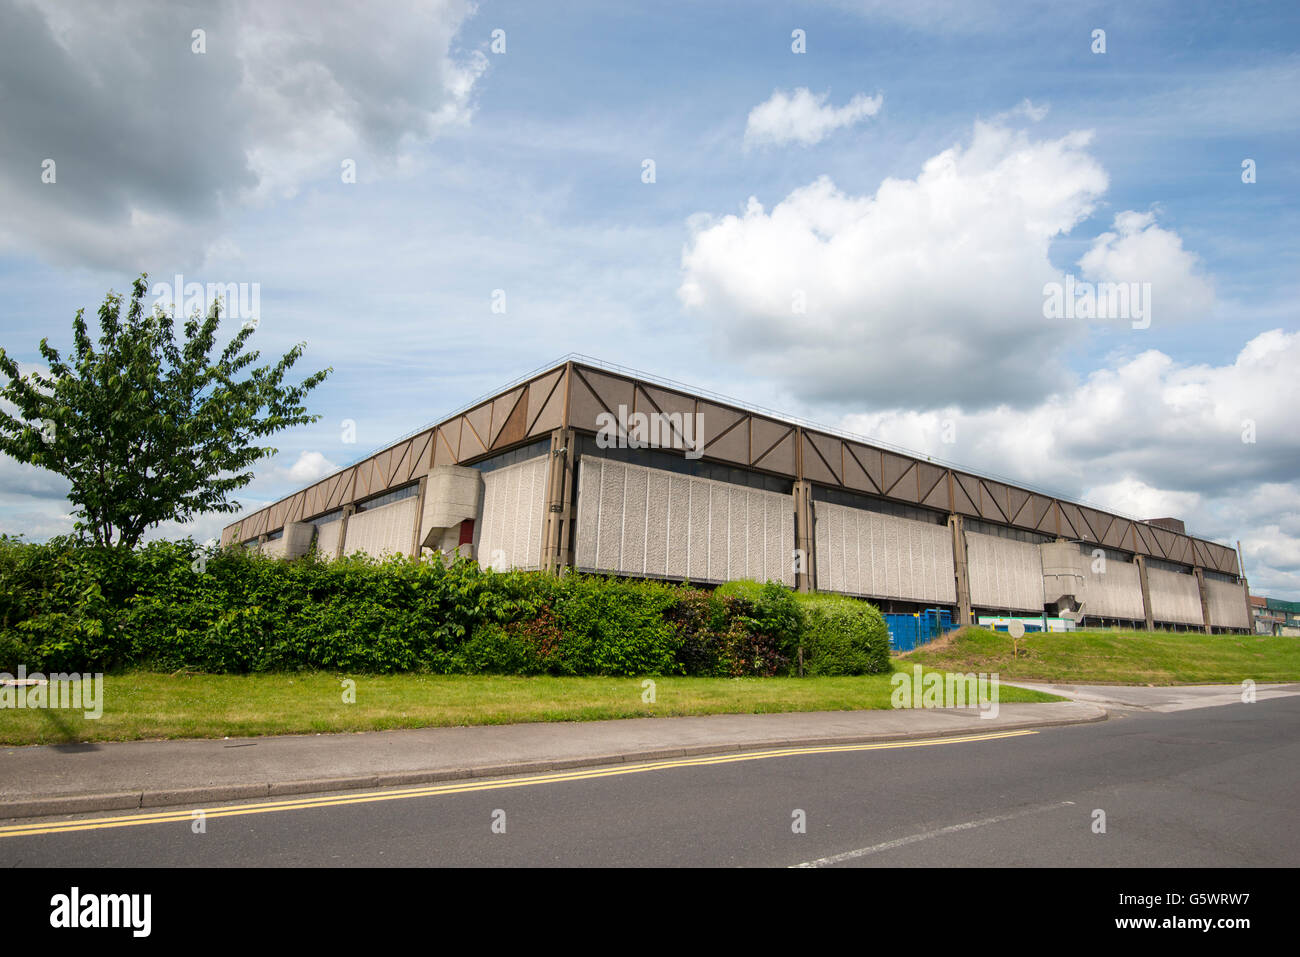 The Imperial Tobacco Horizon Factory on Thane Road in Beeston / Lenton, Nottingham England UK Stock Photo